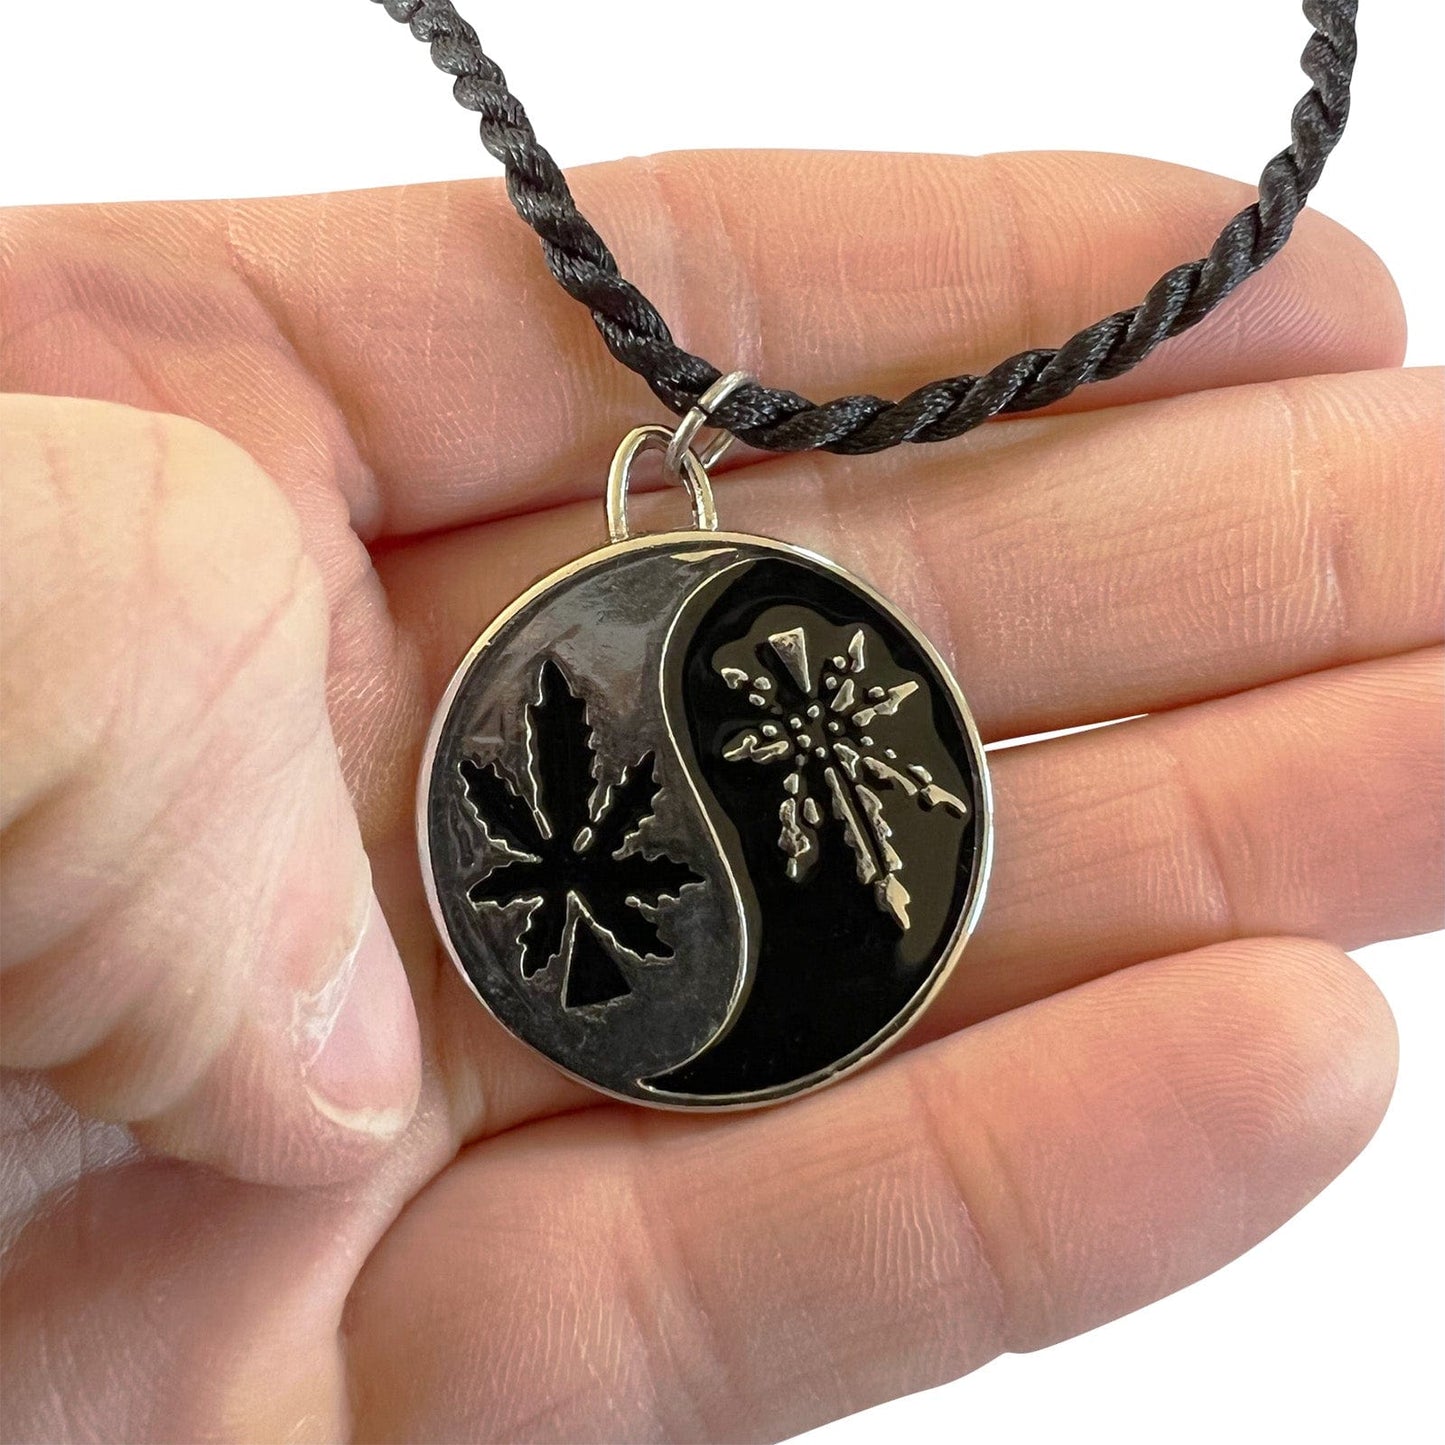 Yin and Yang Marijuana Cannabis Leaf Pendant Necklace Black Cord Chain Jewellery